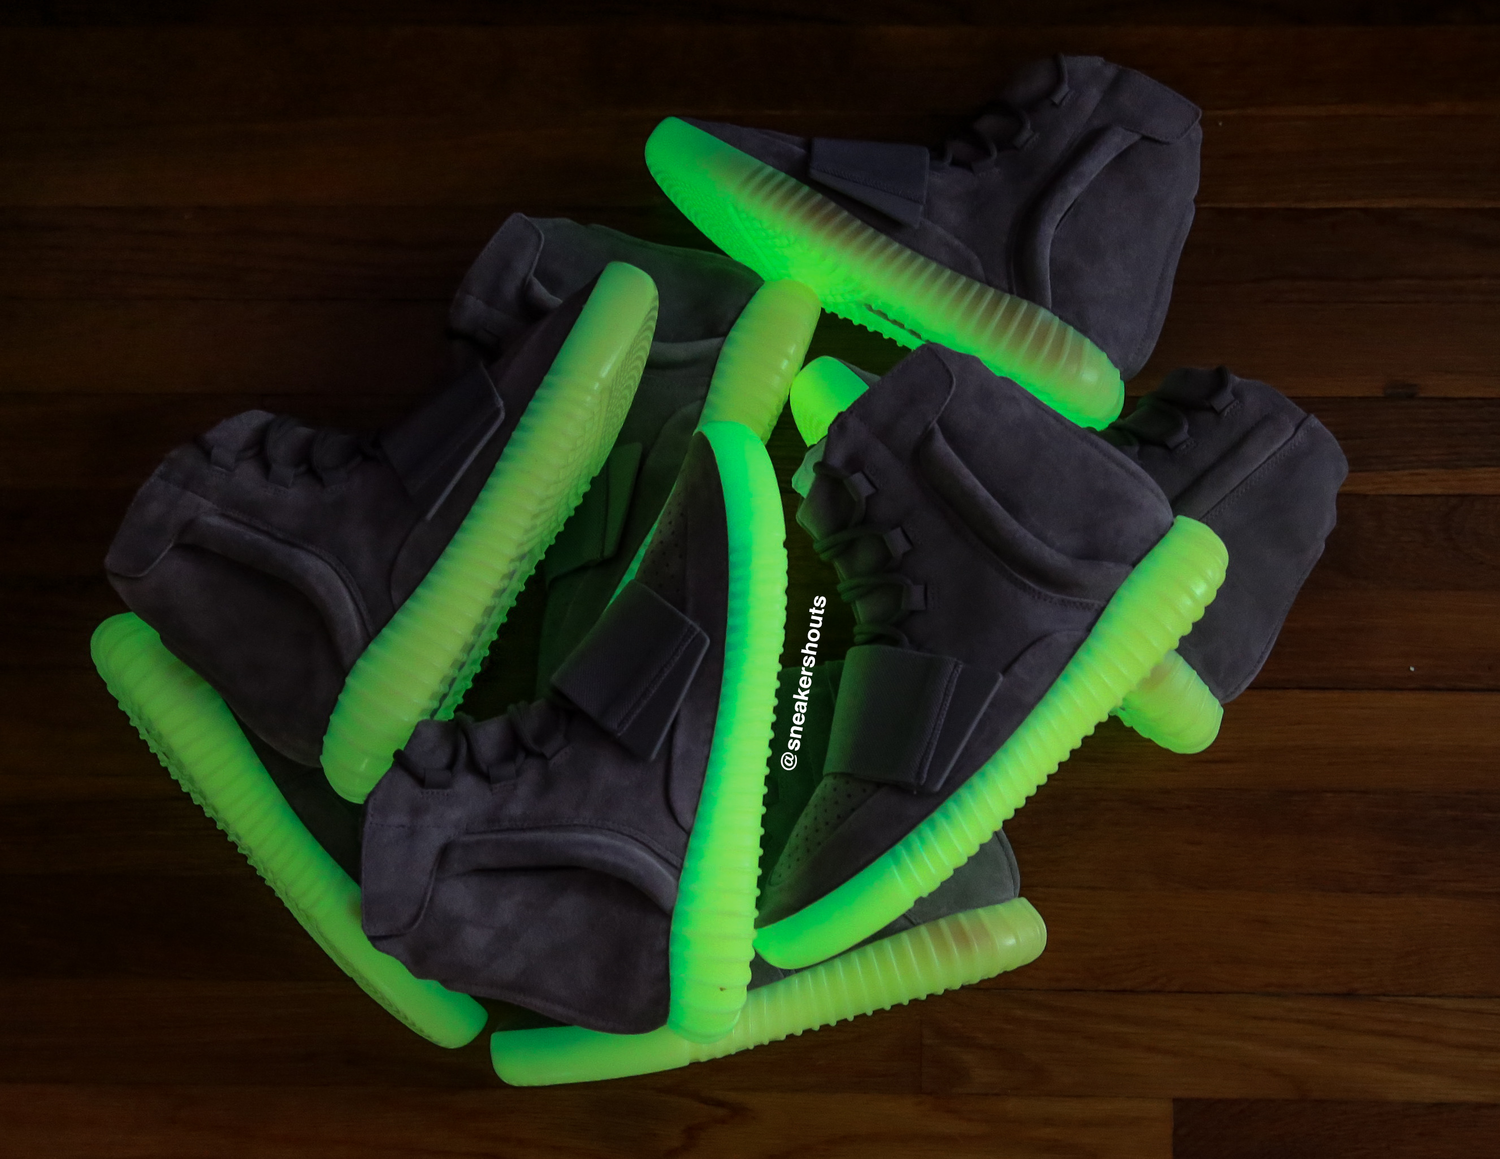 Rastløs schweizisk fordel Exclusive Look at the Adidas Yeezy 750 Boost "Light Grey/Gum" — Sneaker  Shouts